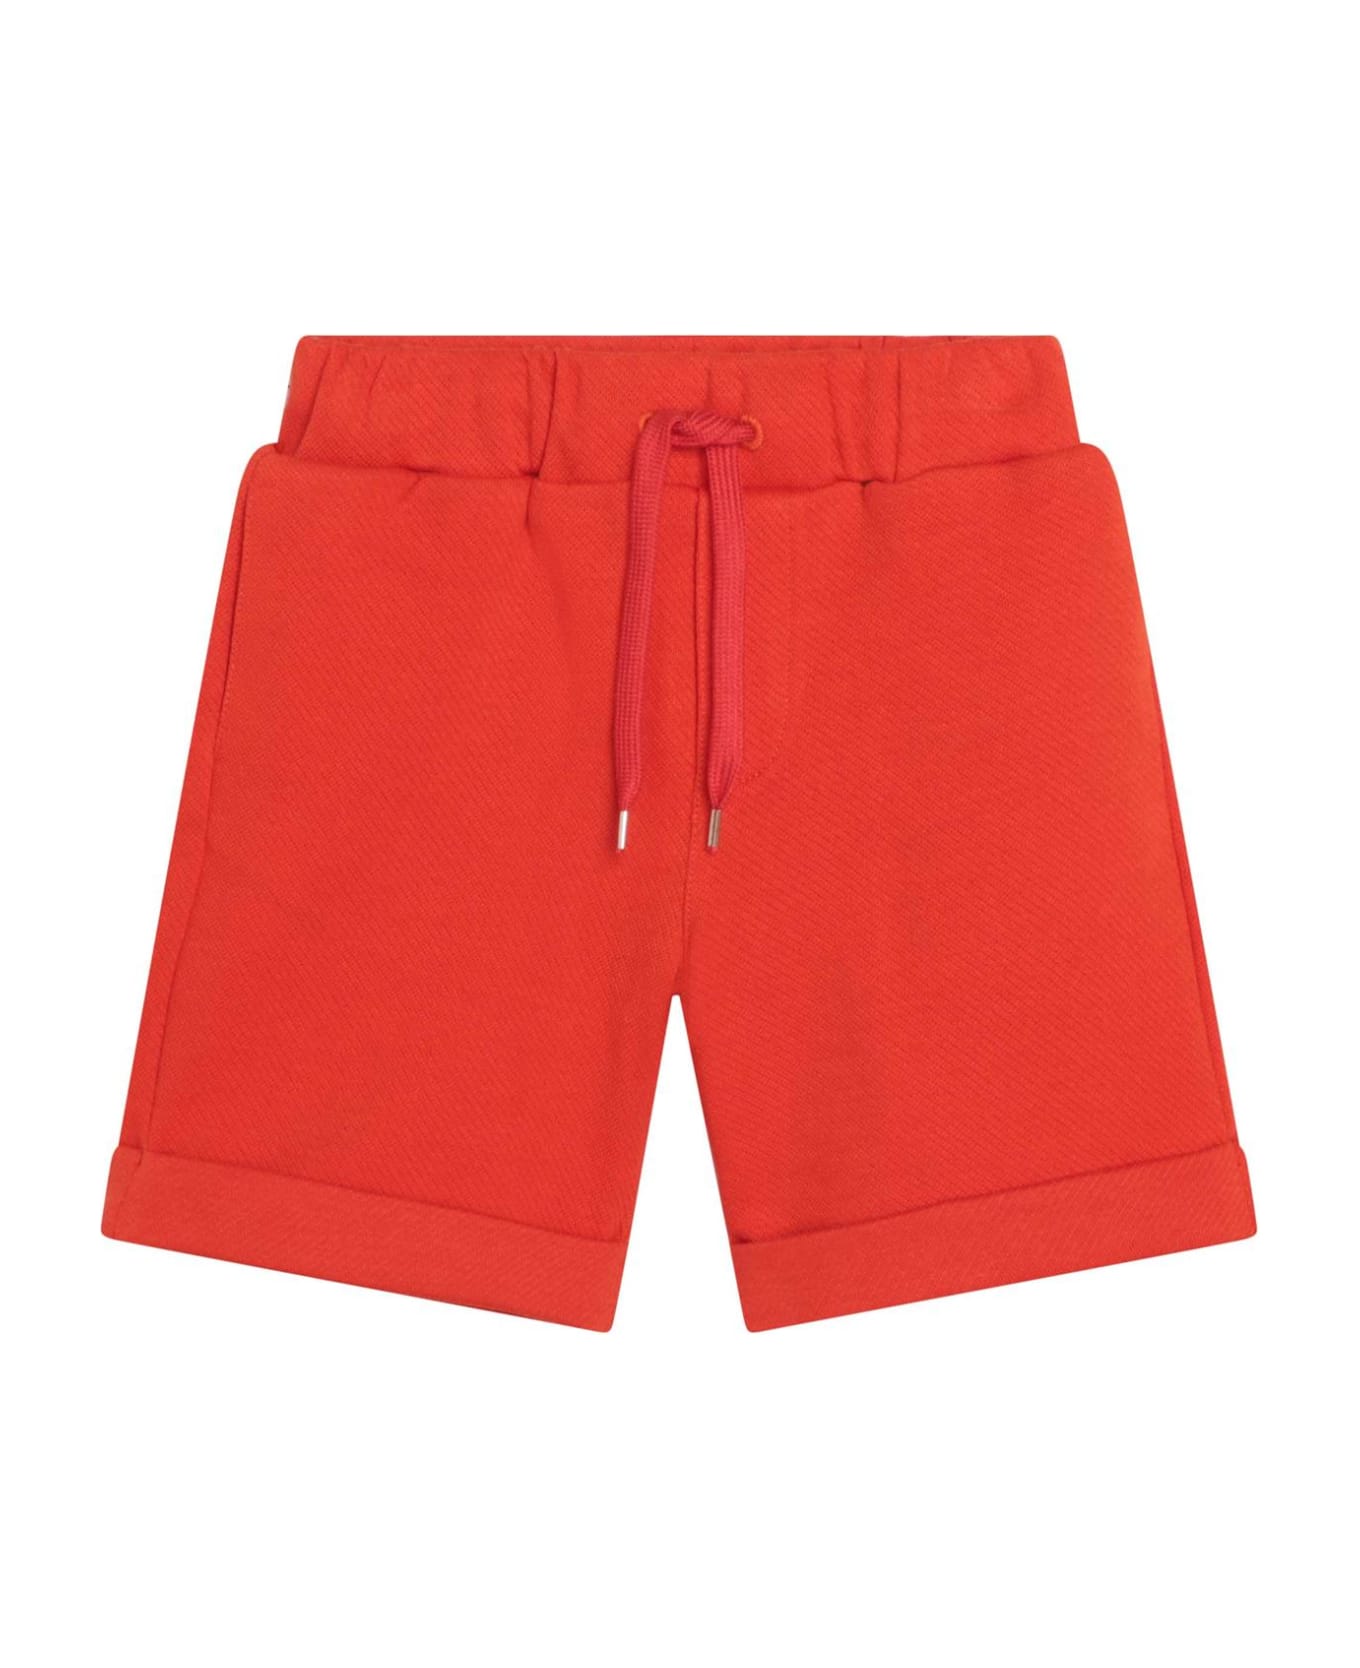 Kenzo Kids Cuffed Shorts - Rosso